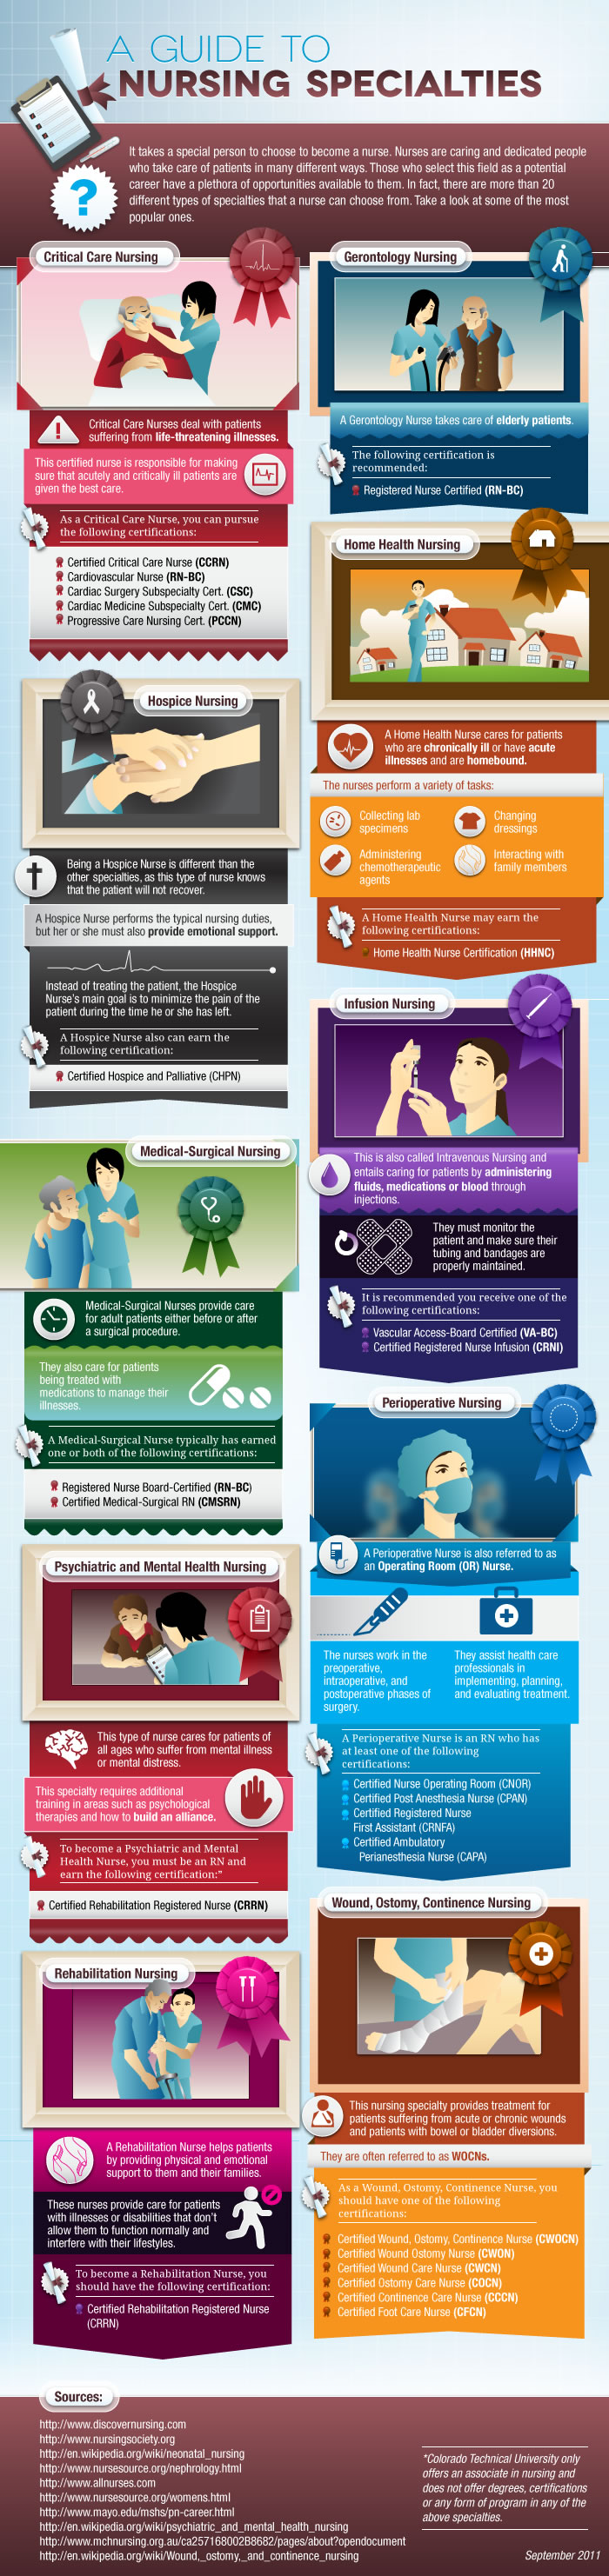 infographic-nursing-specialties